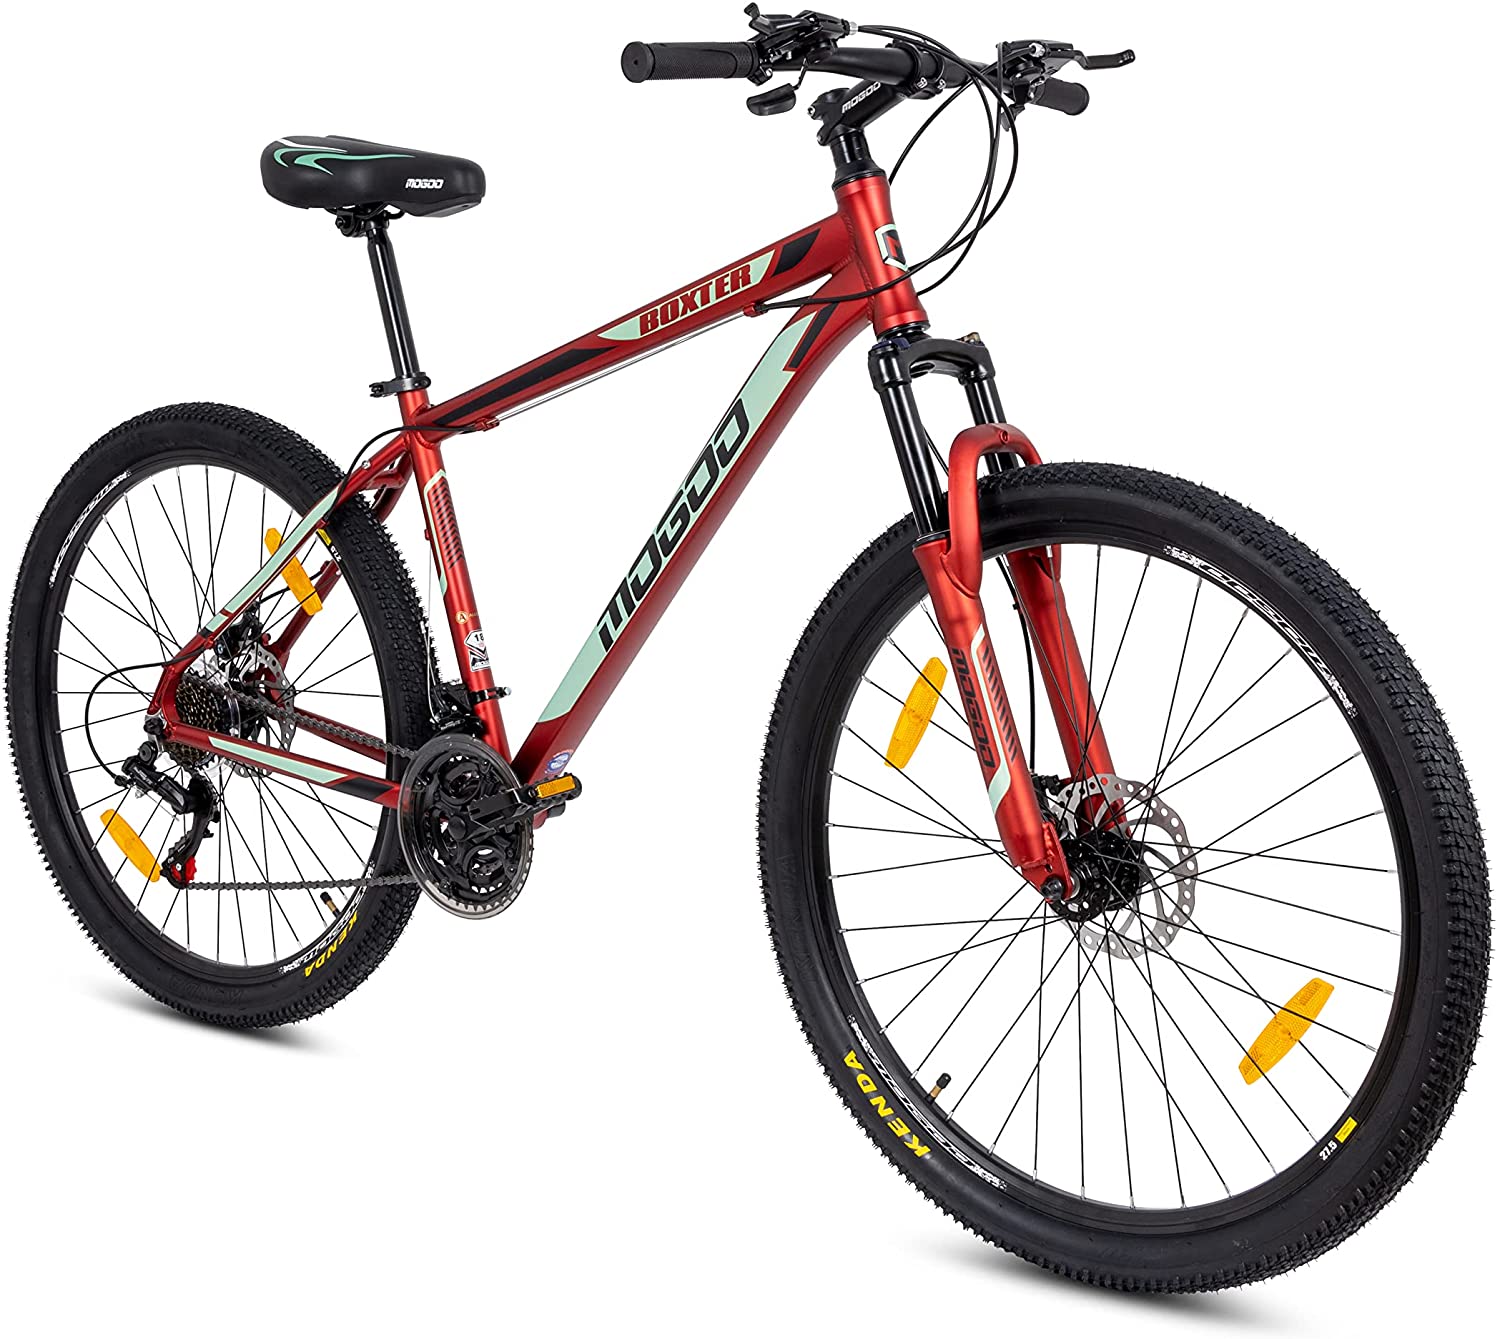 Mogoo Boxter Alloy Mountain Bike 27.5 Inch, Red